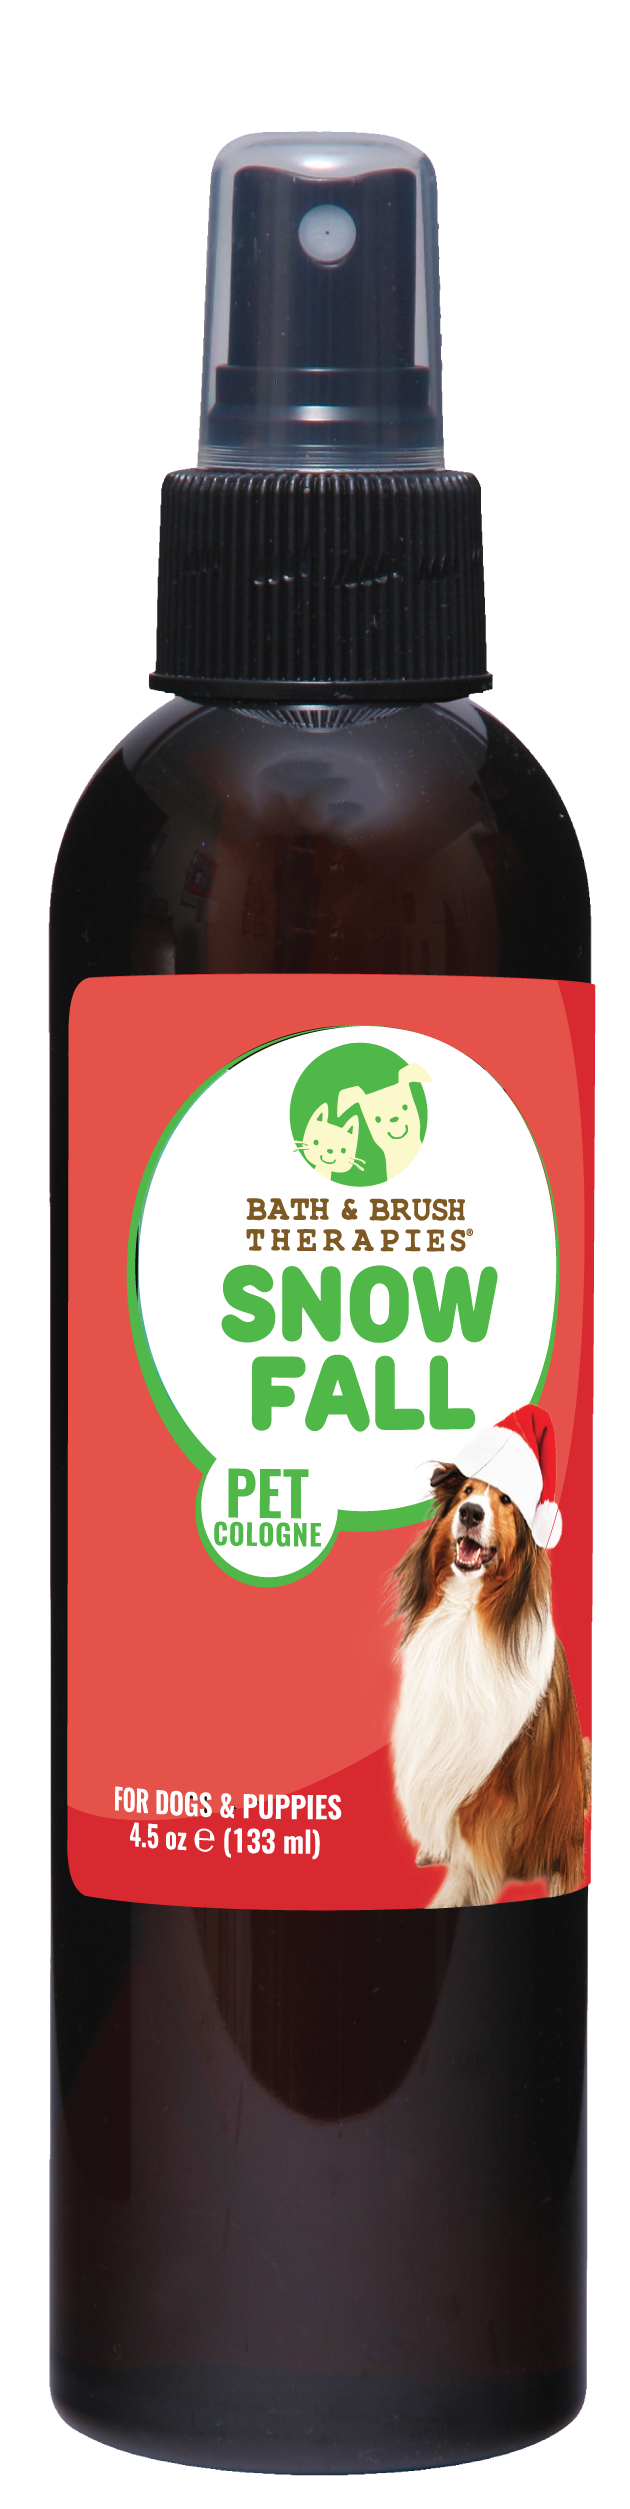 Snowfall Pet Cologne